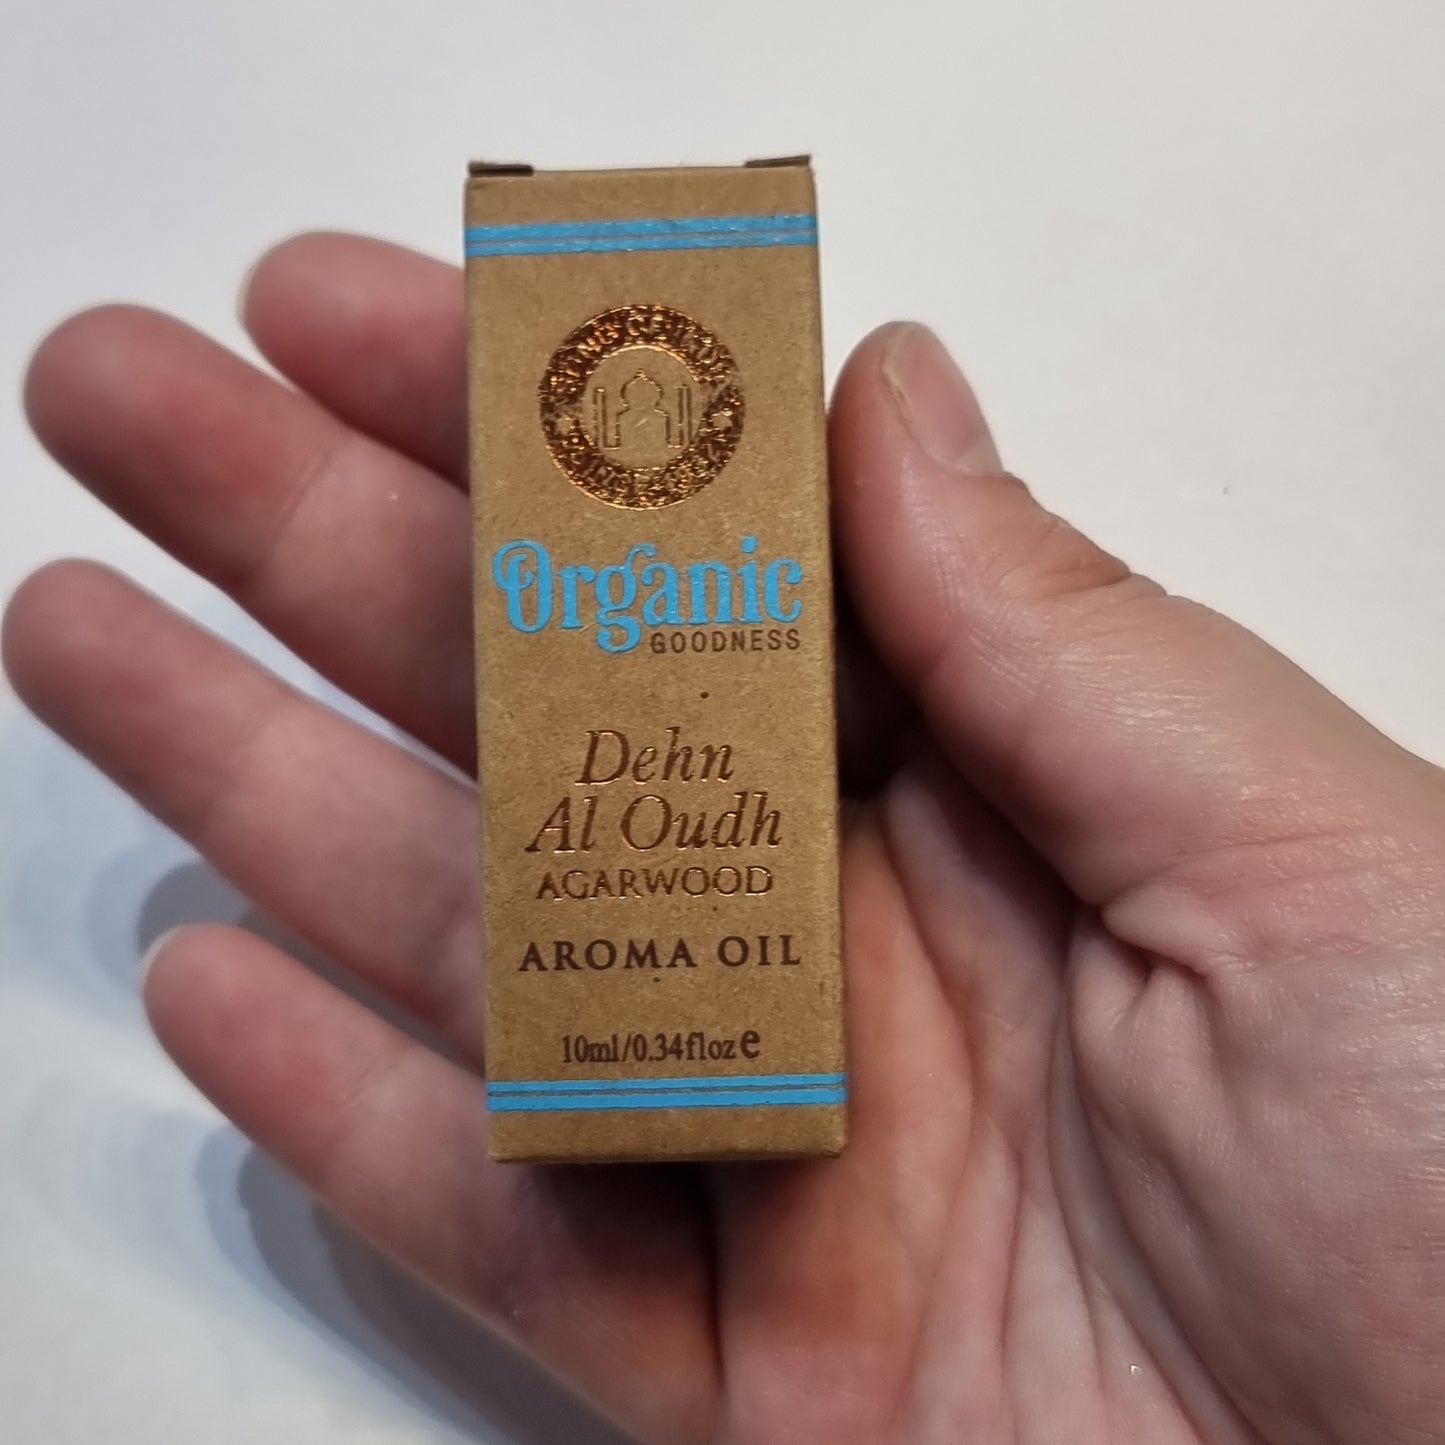 Organic aroma oil - dehn al oudh - Rivendell Shop